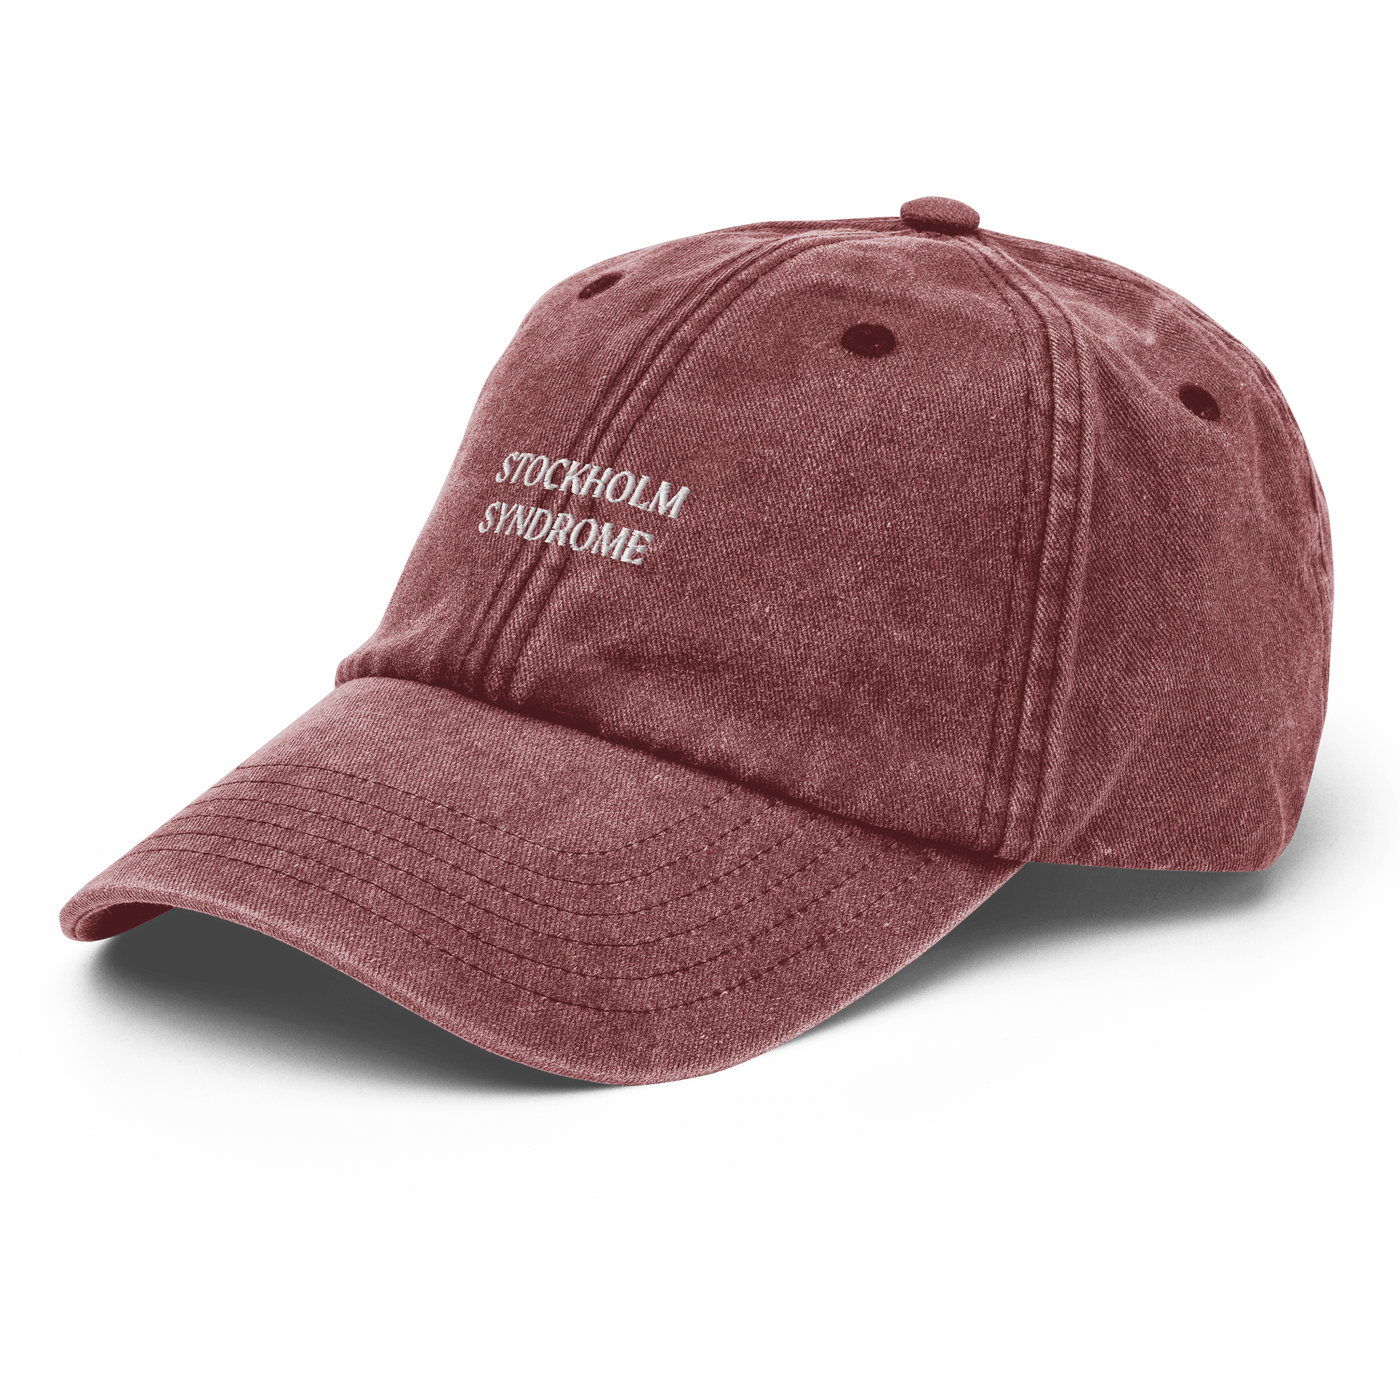 Stockholm Syndrome Vintage Hat - Vintage Red - - Just Another Cap Store